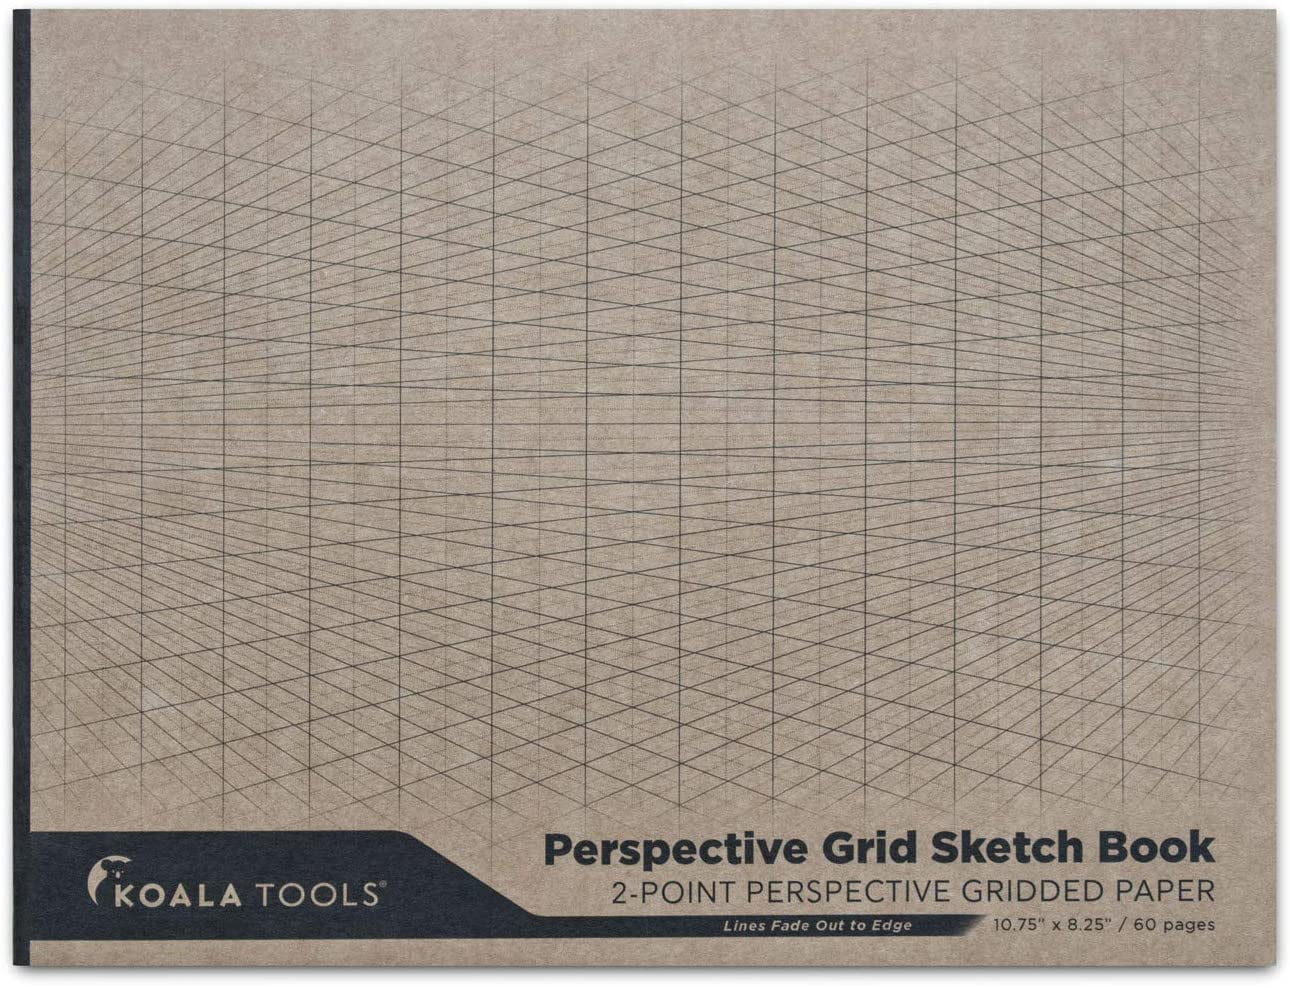 DOWNLOAD (PDF) Perspective Grid Sketchbook: 1-Point Room, 1-Point, 2-Point,  and 3-Point Perspective Grid - 170 Pages - 8.5'x11' Practice Workbook